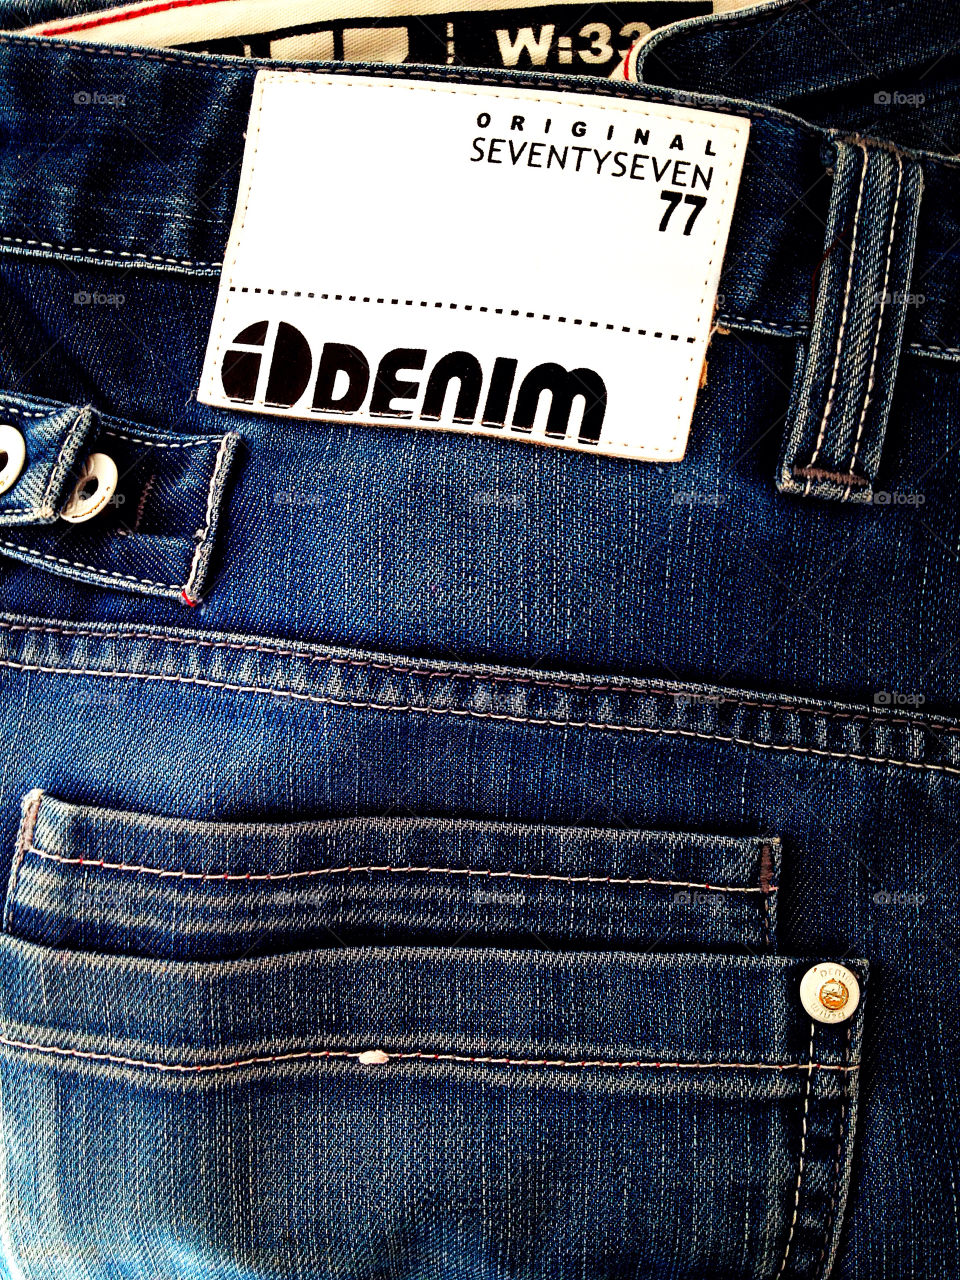 jeans clothes denim denmark by pellepelle